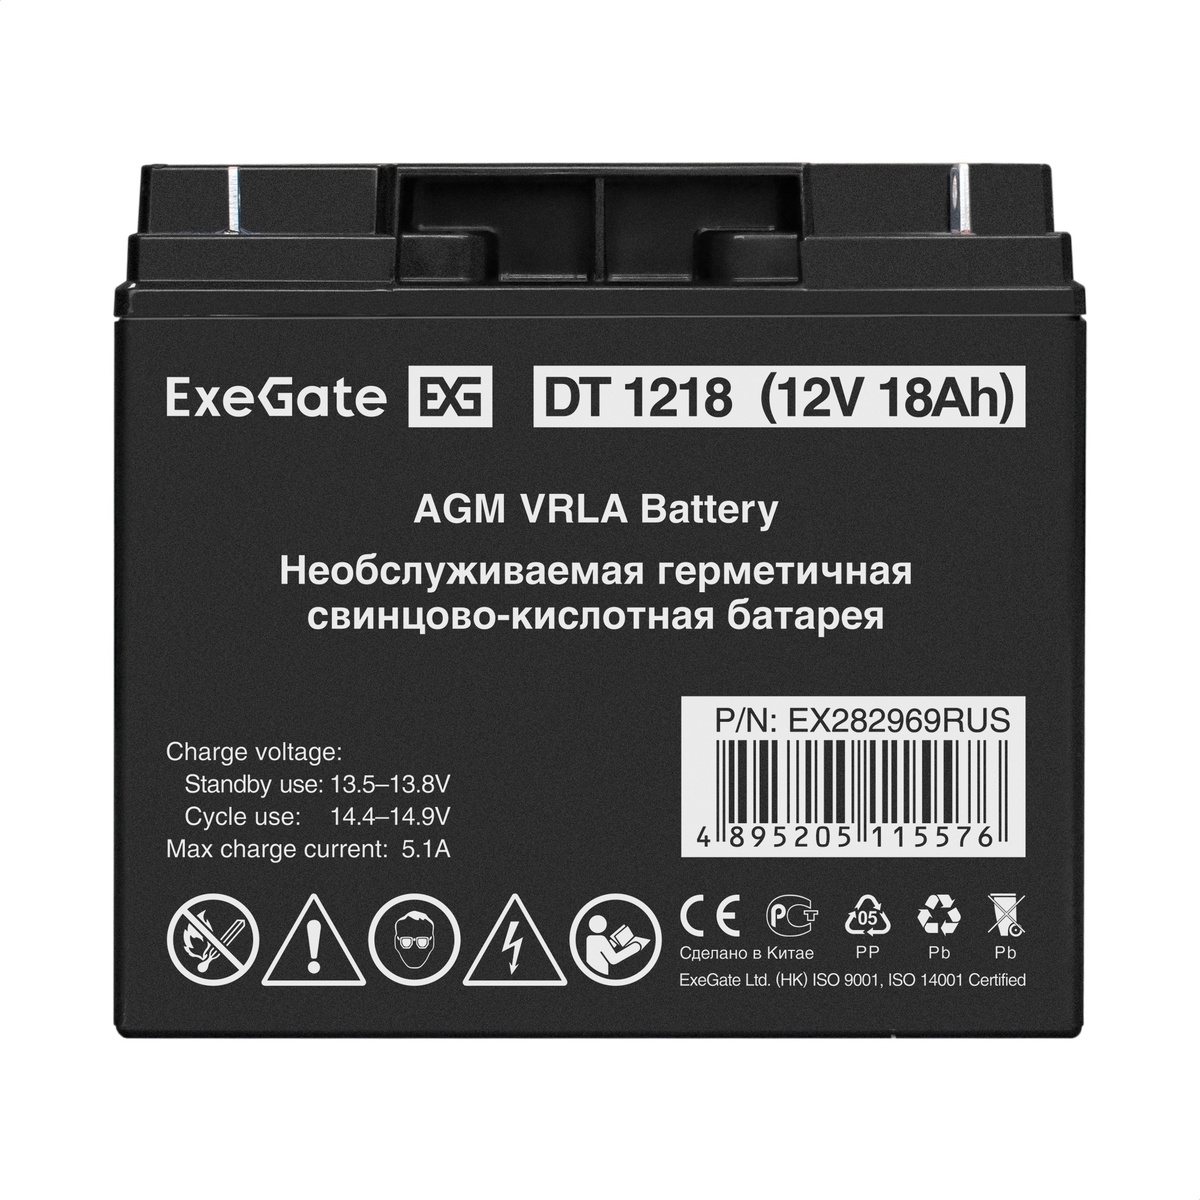 Battery ExeGate DT 1218